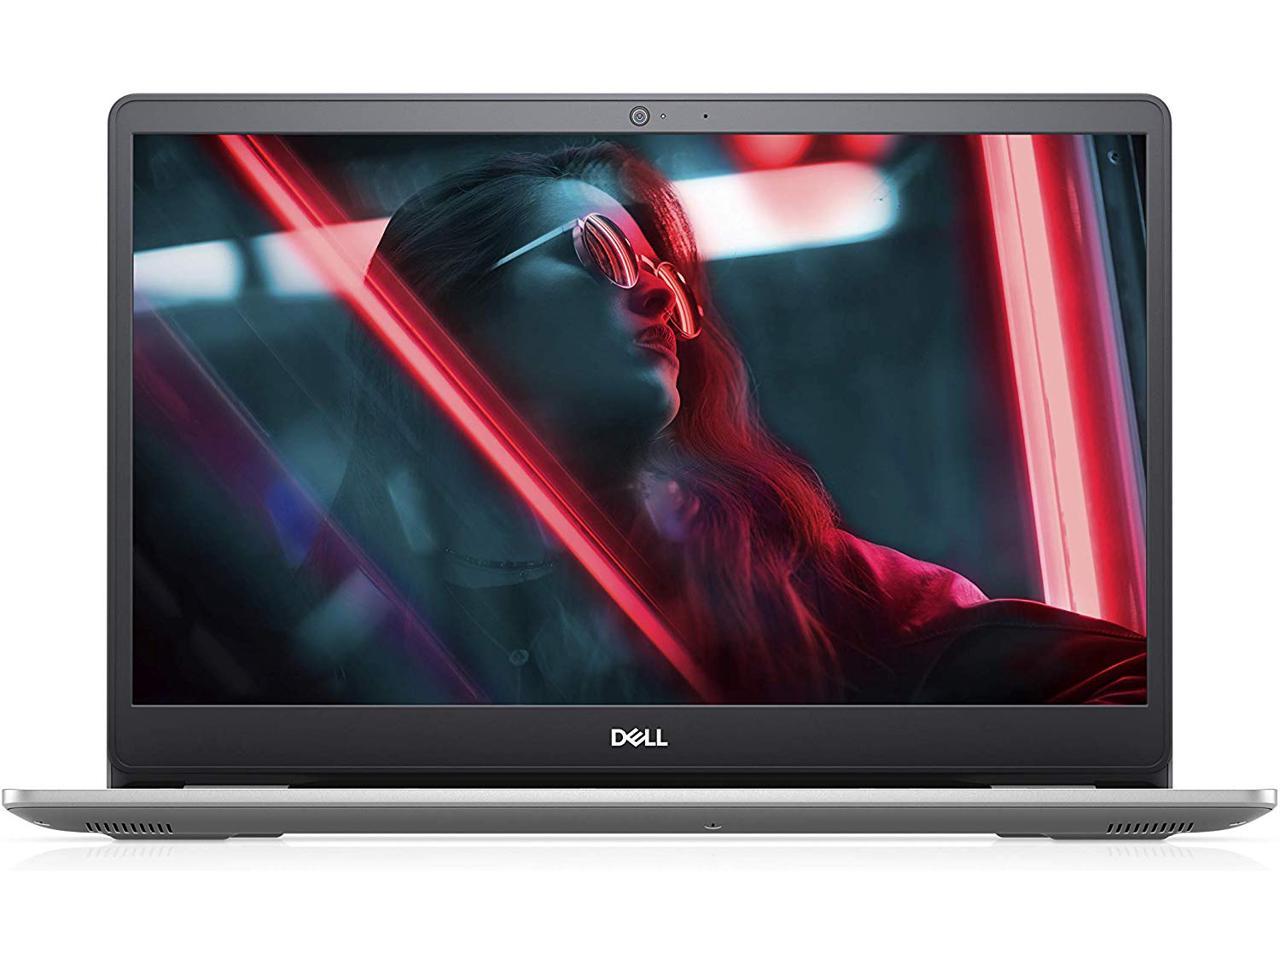 Dell Inspiron 15 Laptop: 10th Gen Core i5-1035G1, 256GB SSD, 8GB RAM, 15.6" Full HD Display